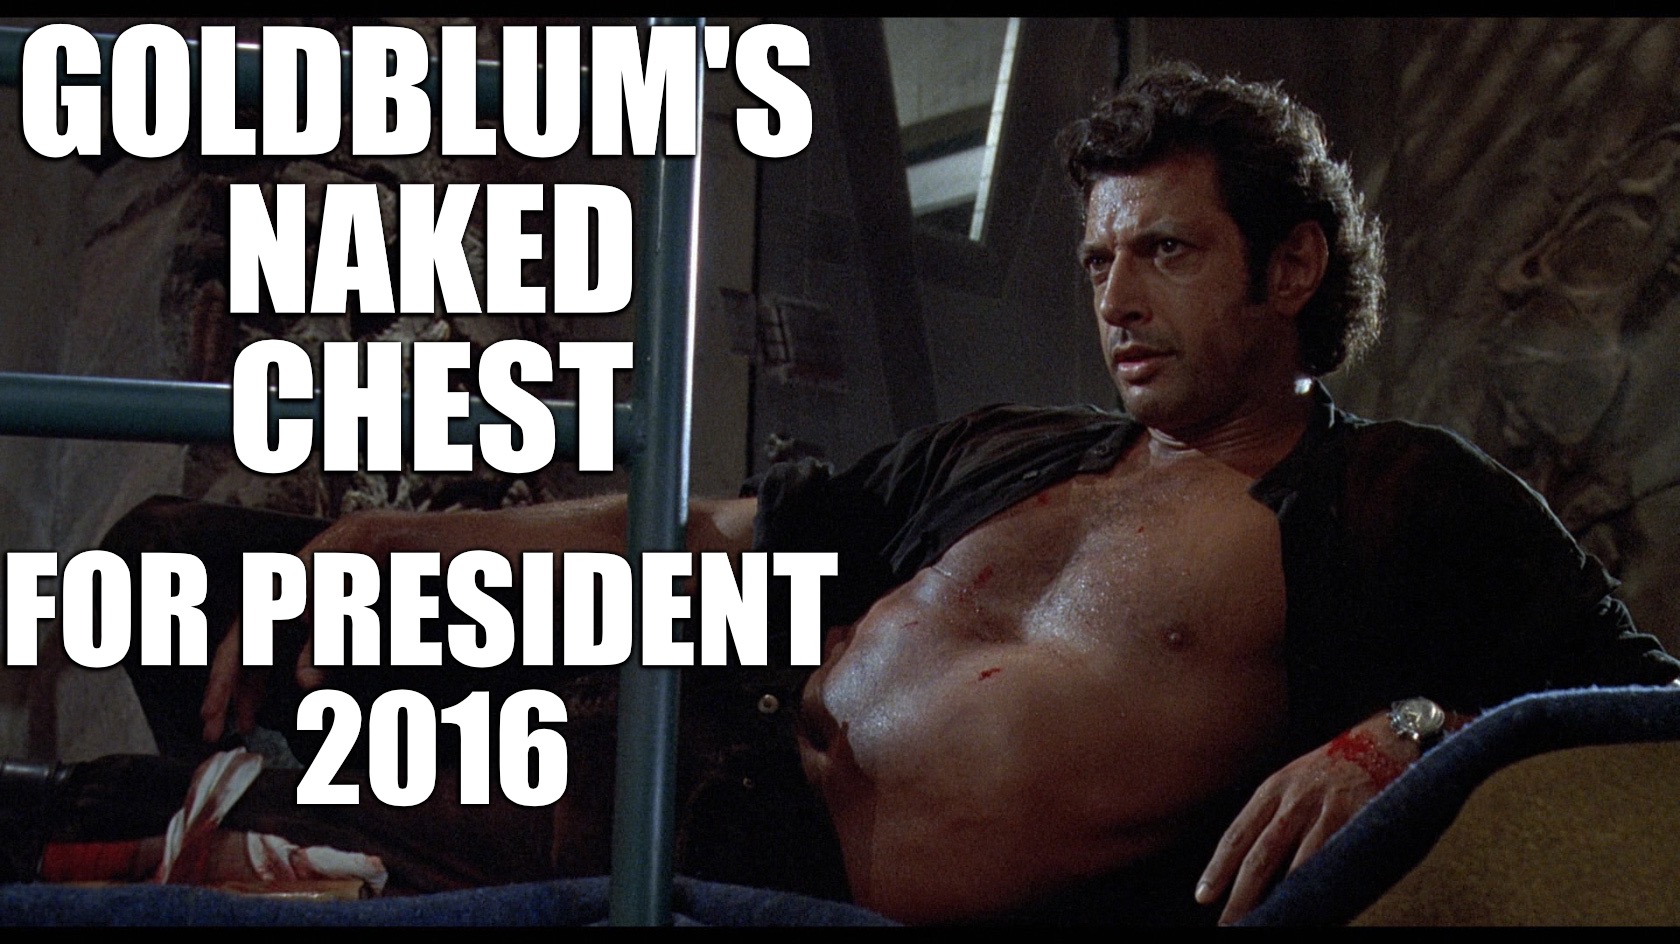 Goldblum's naked chest for president | GOLDBLUM'S NAKED CHEST; FOR PRESIDENT 2016 | image tagged in jeff goldblum,president,iowa,caucus,election 2016,funny | made w/ Imgflip meme maker